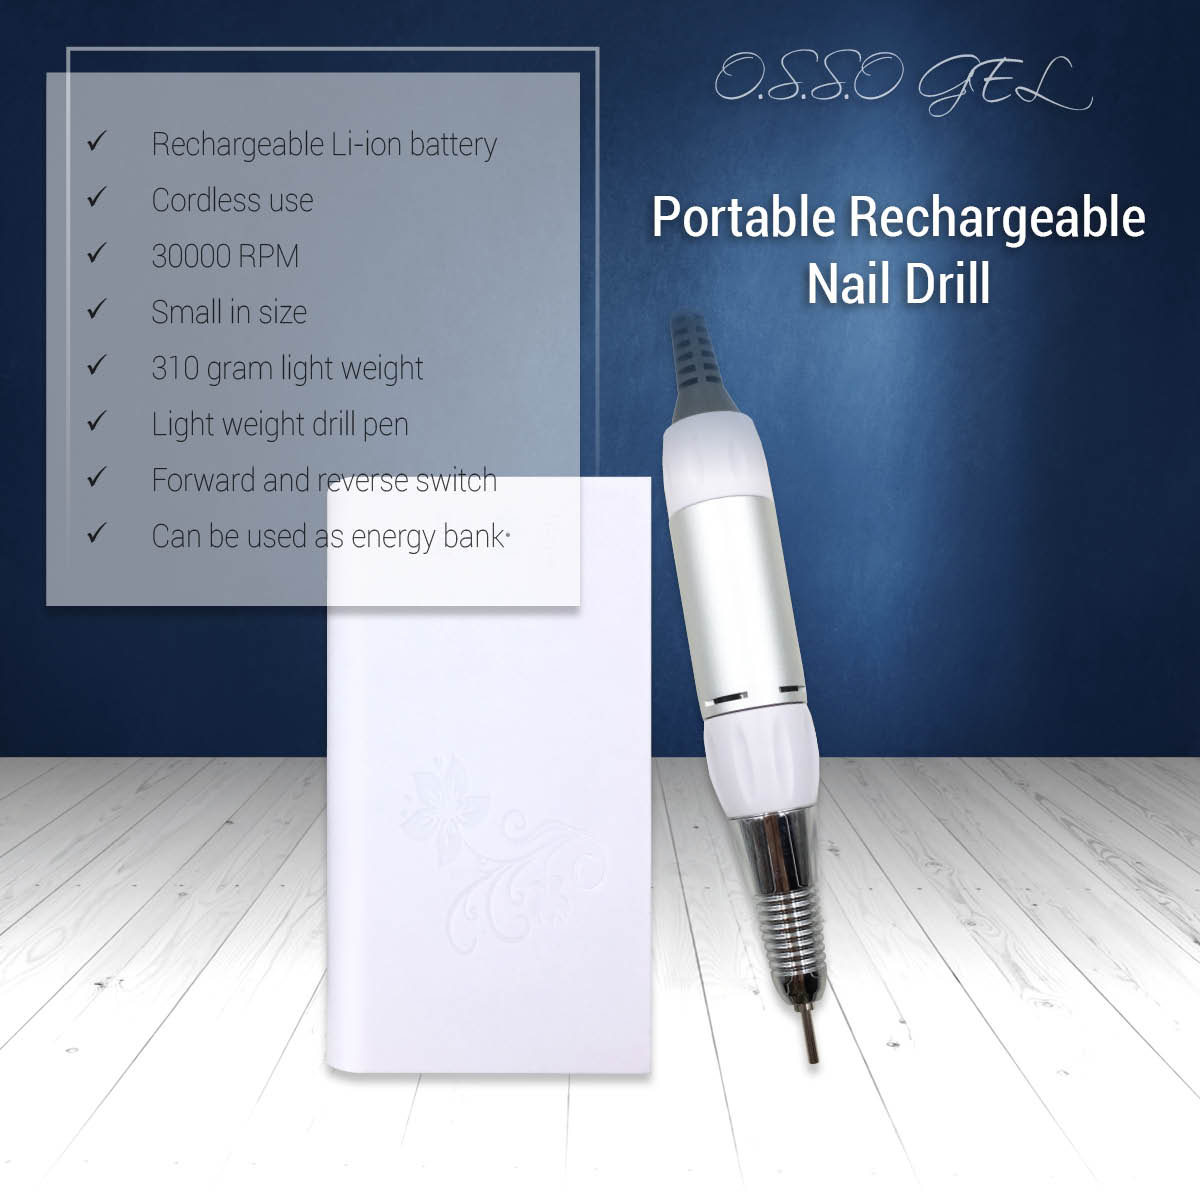 Portable Recheargable Nail Drill